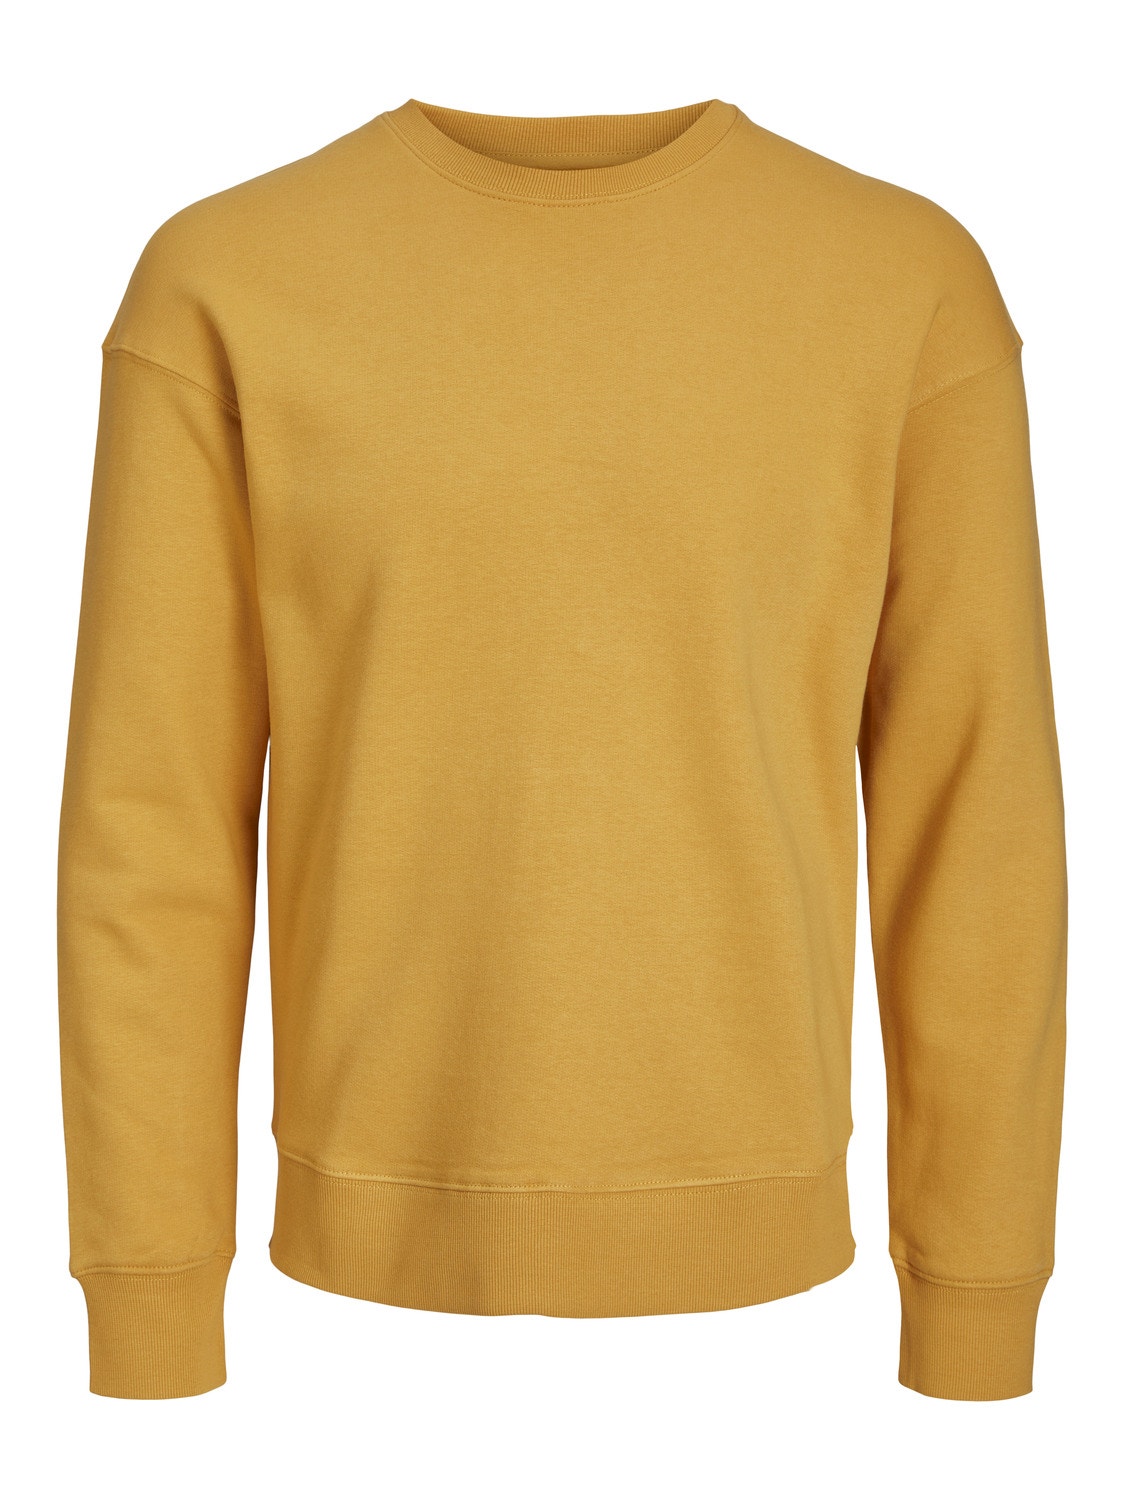 Jack & Jones Plain Crewn Neck Sweatshirt -Honey Gold - 12208182